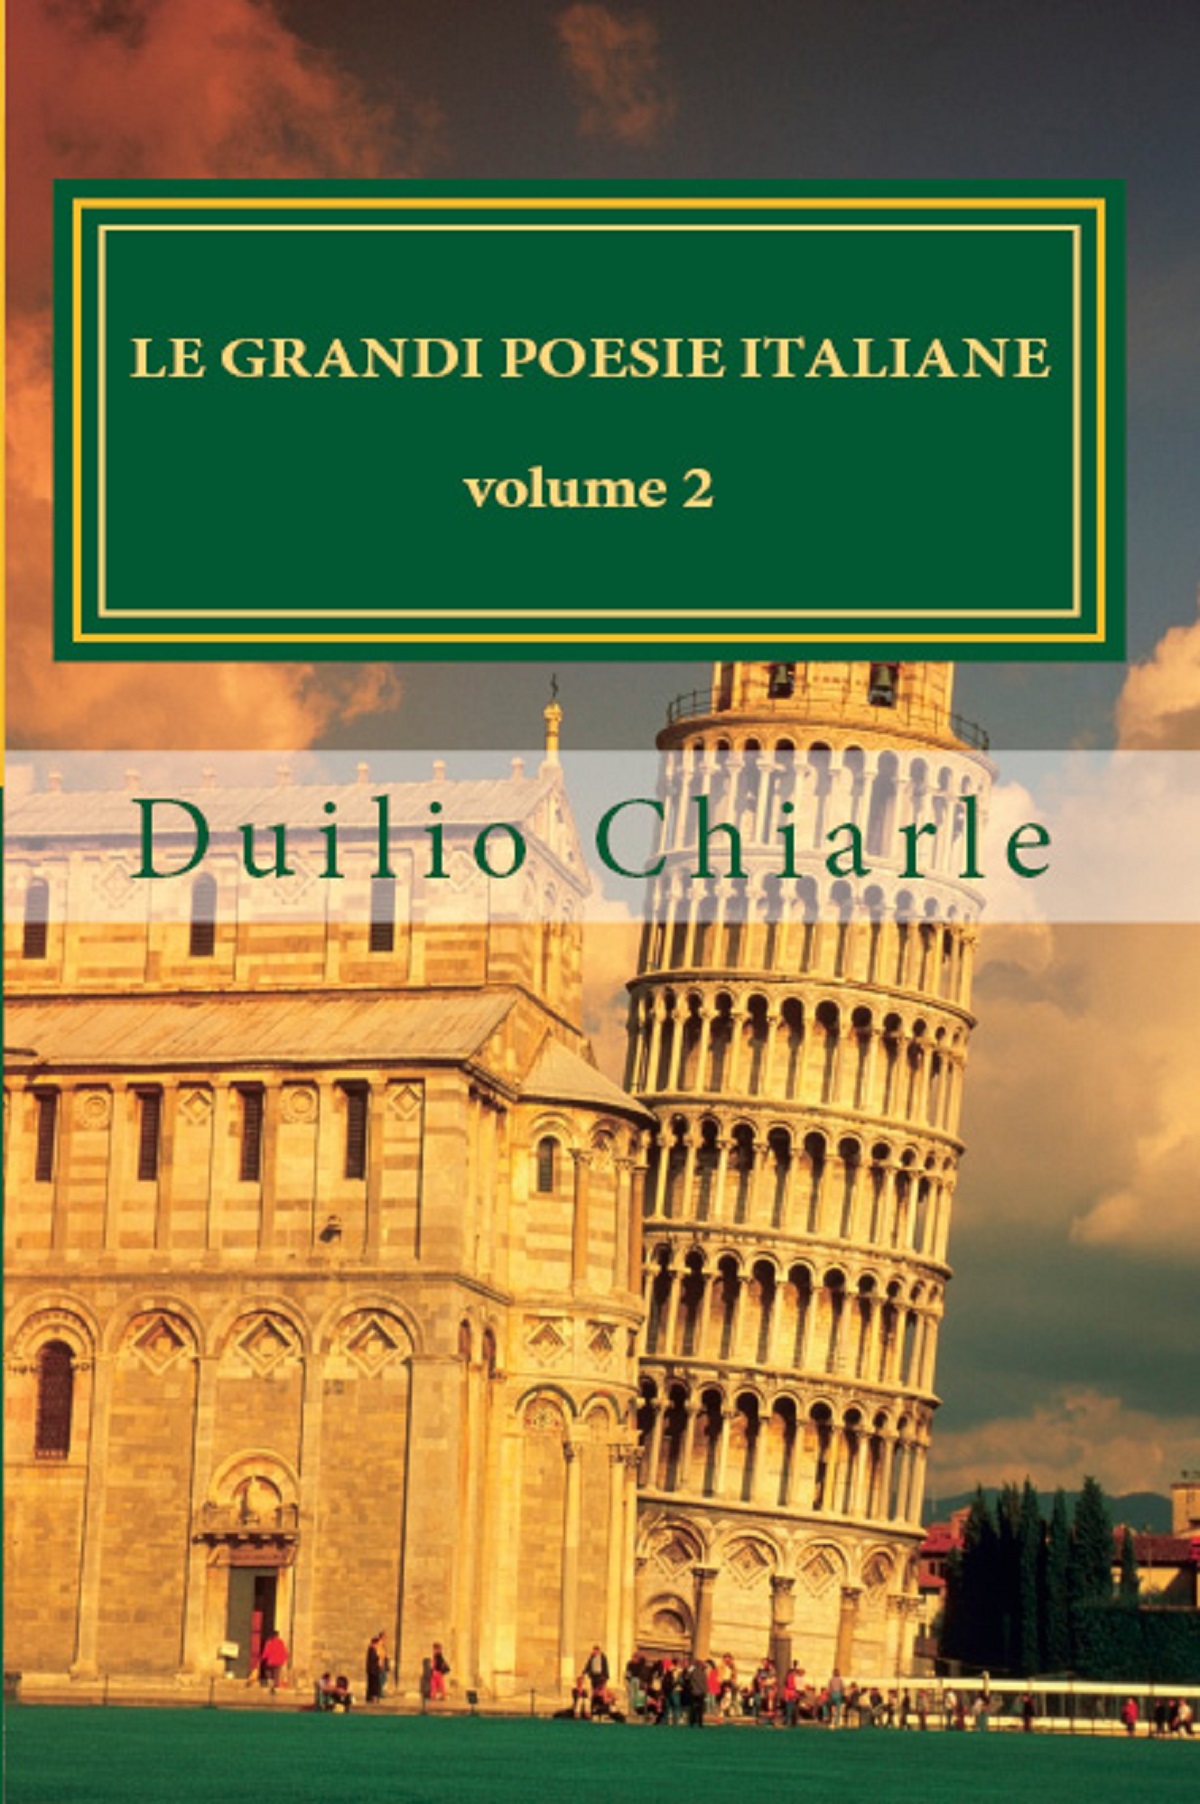 LE GRANDI POESIE ITALIANE Volume 2)